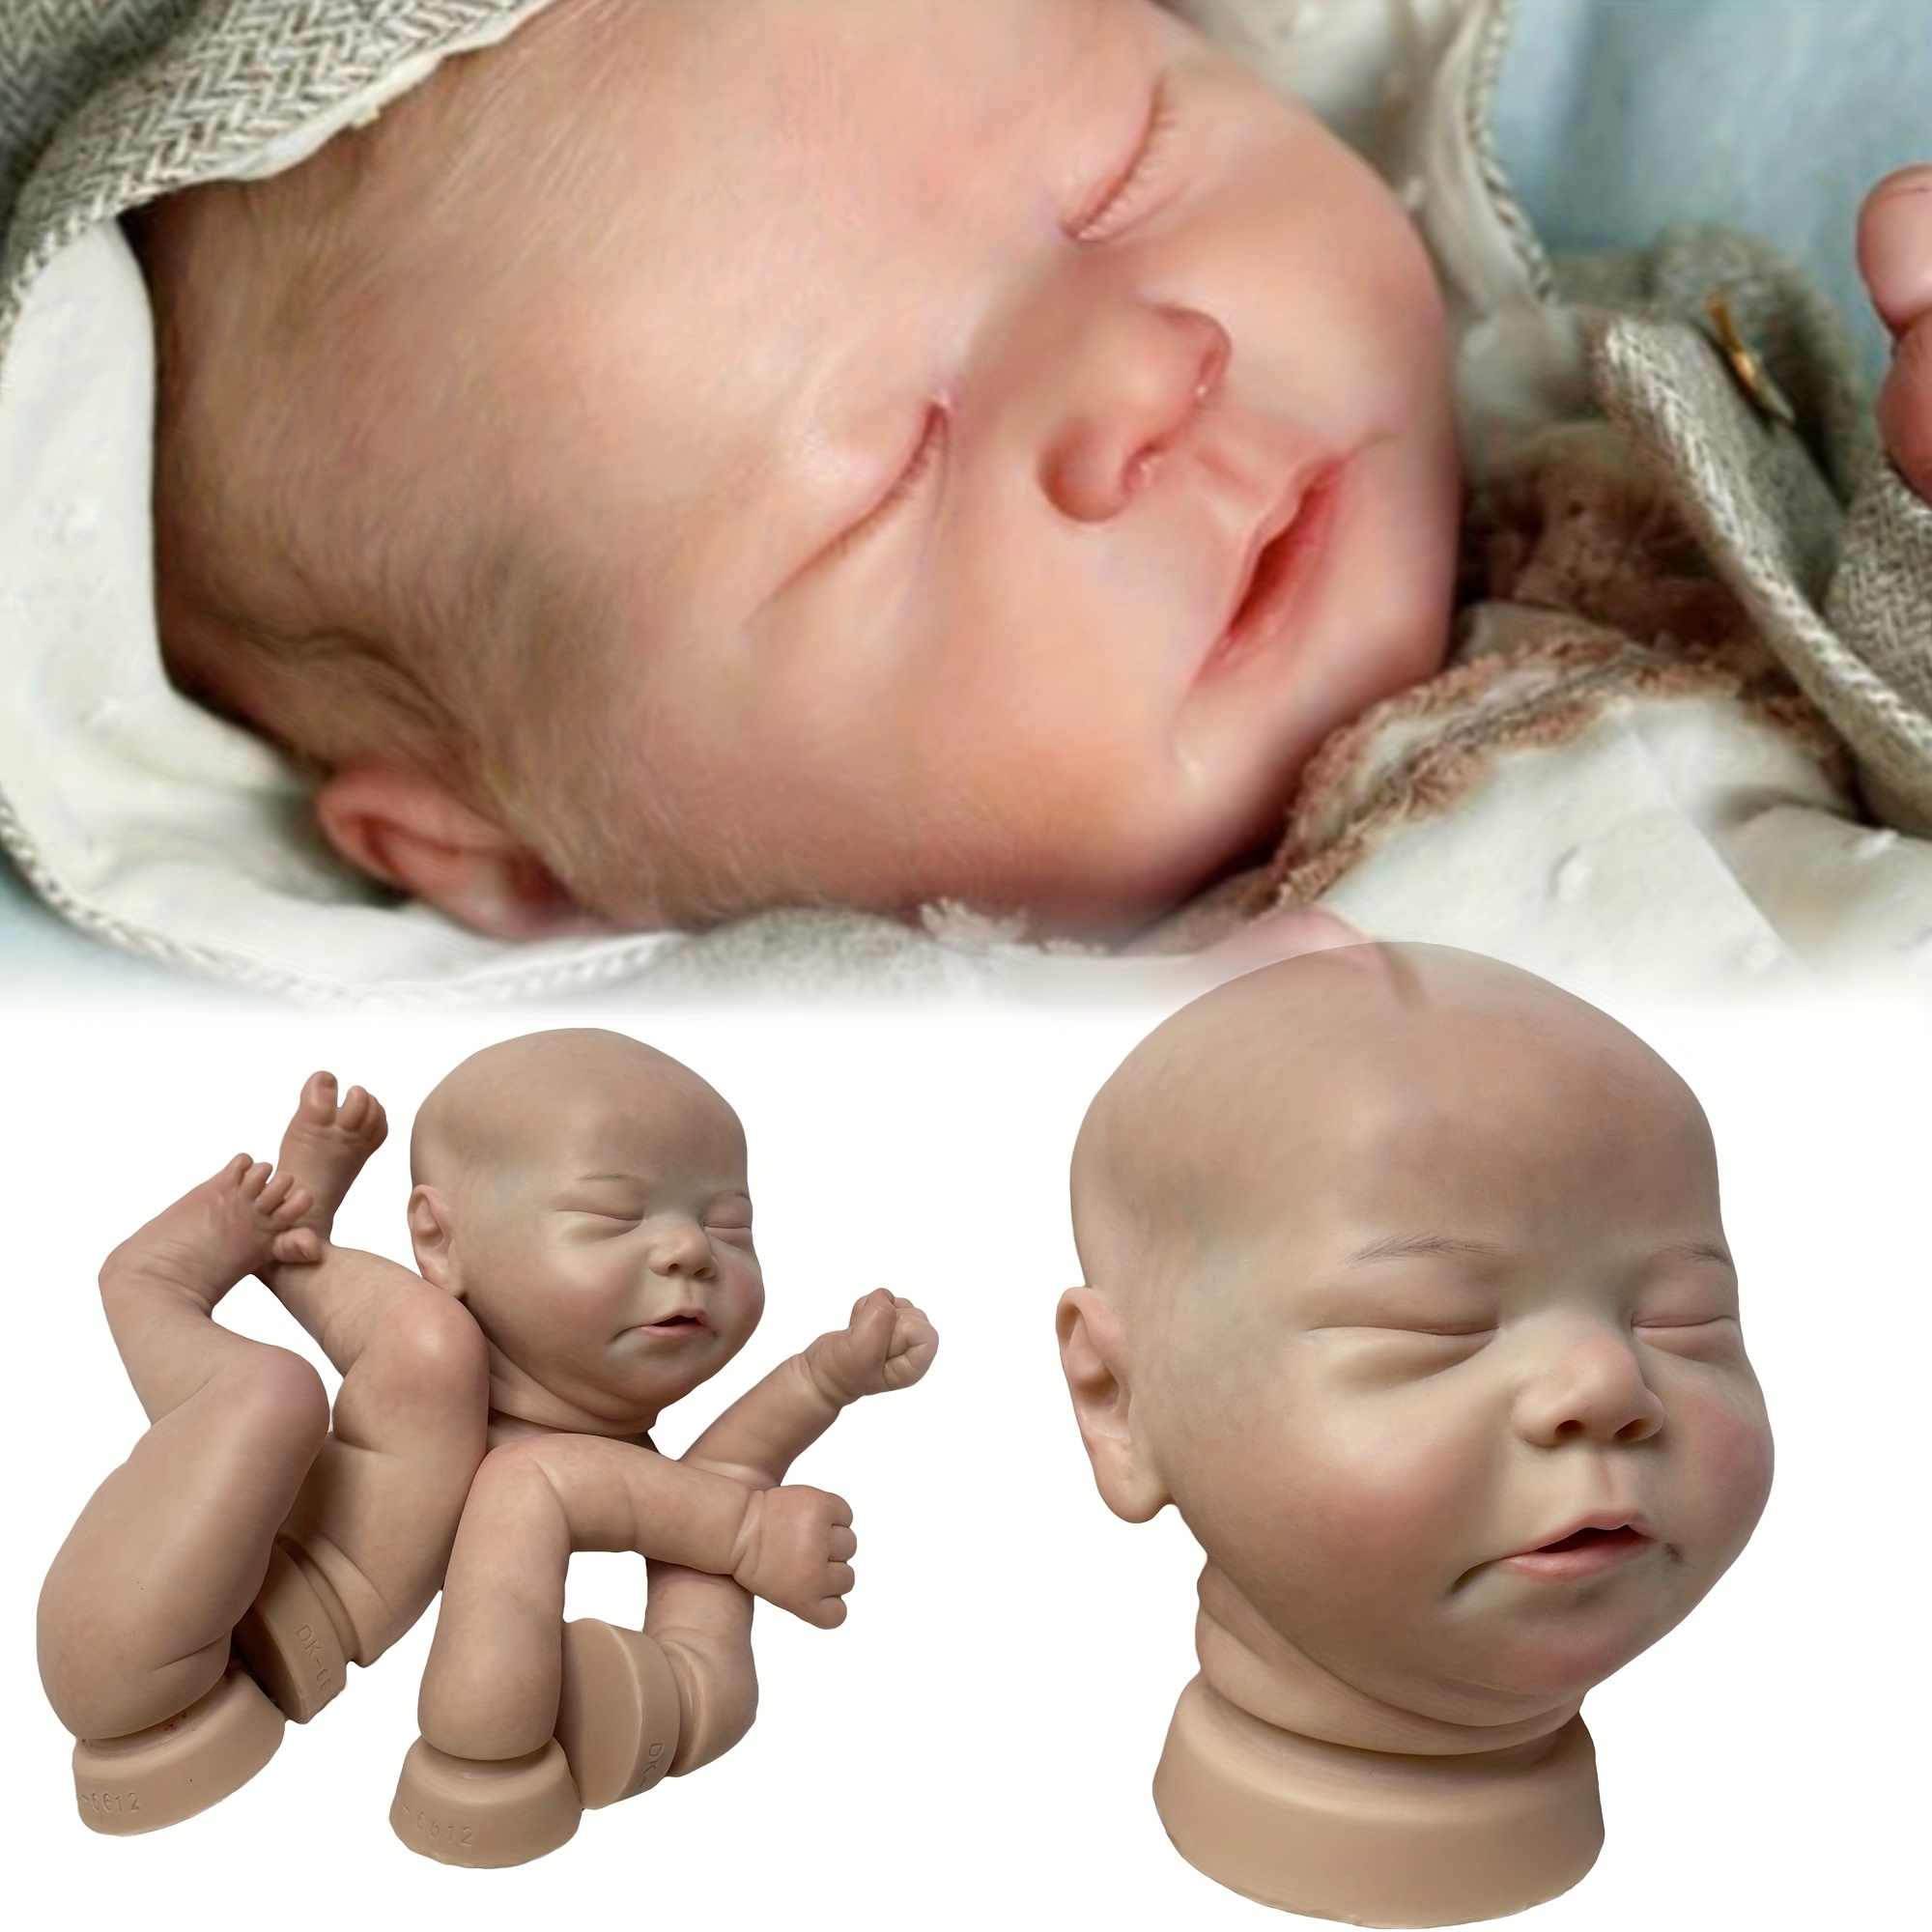 Full silicone reborn dolls 2255cm girl body bb reborn babies toddler dolls  for child birthday